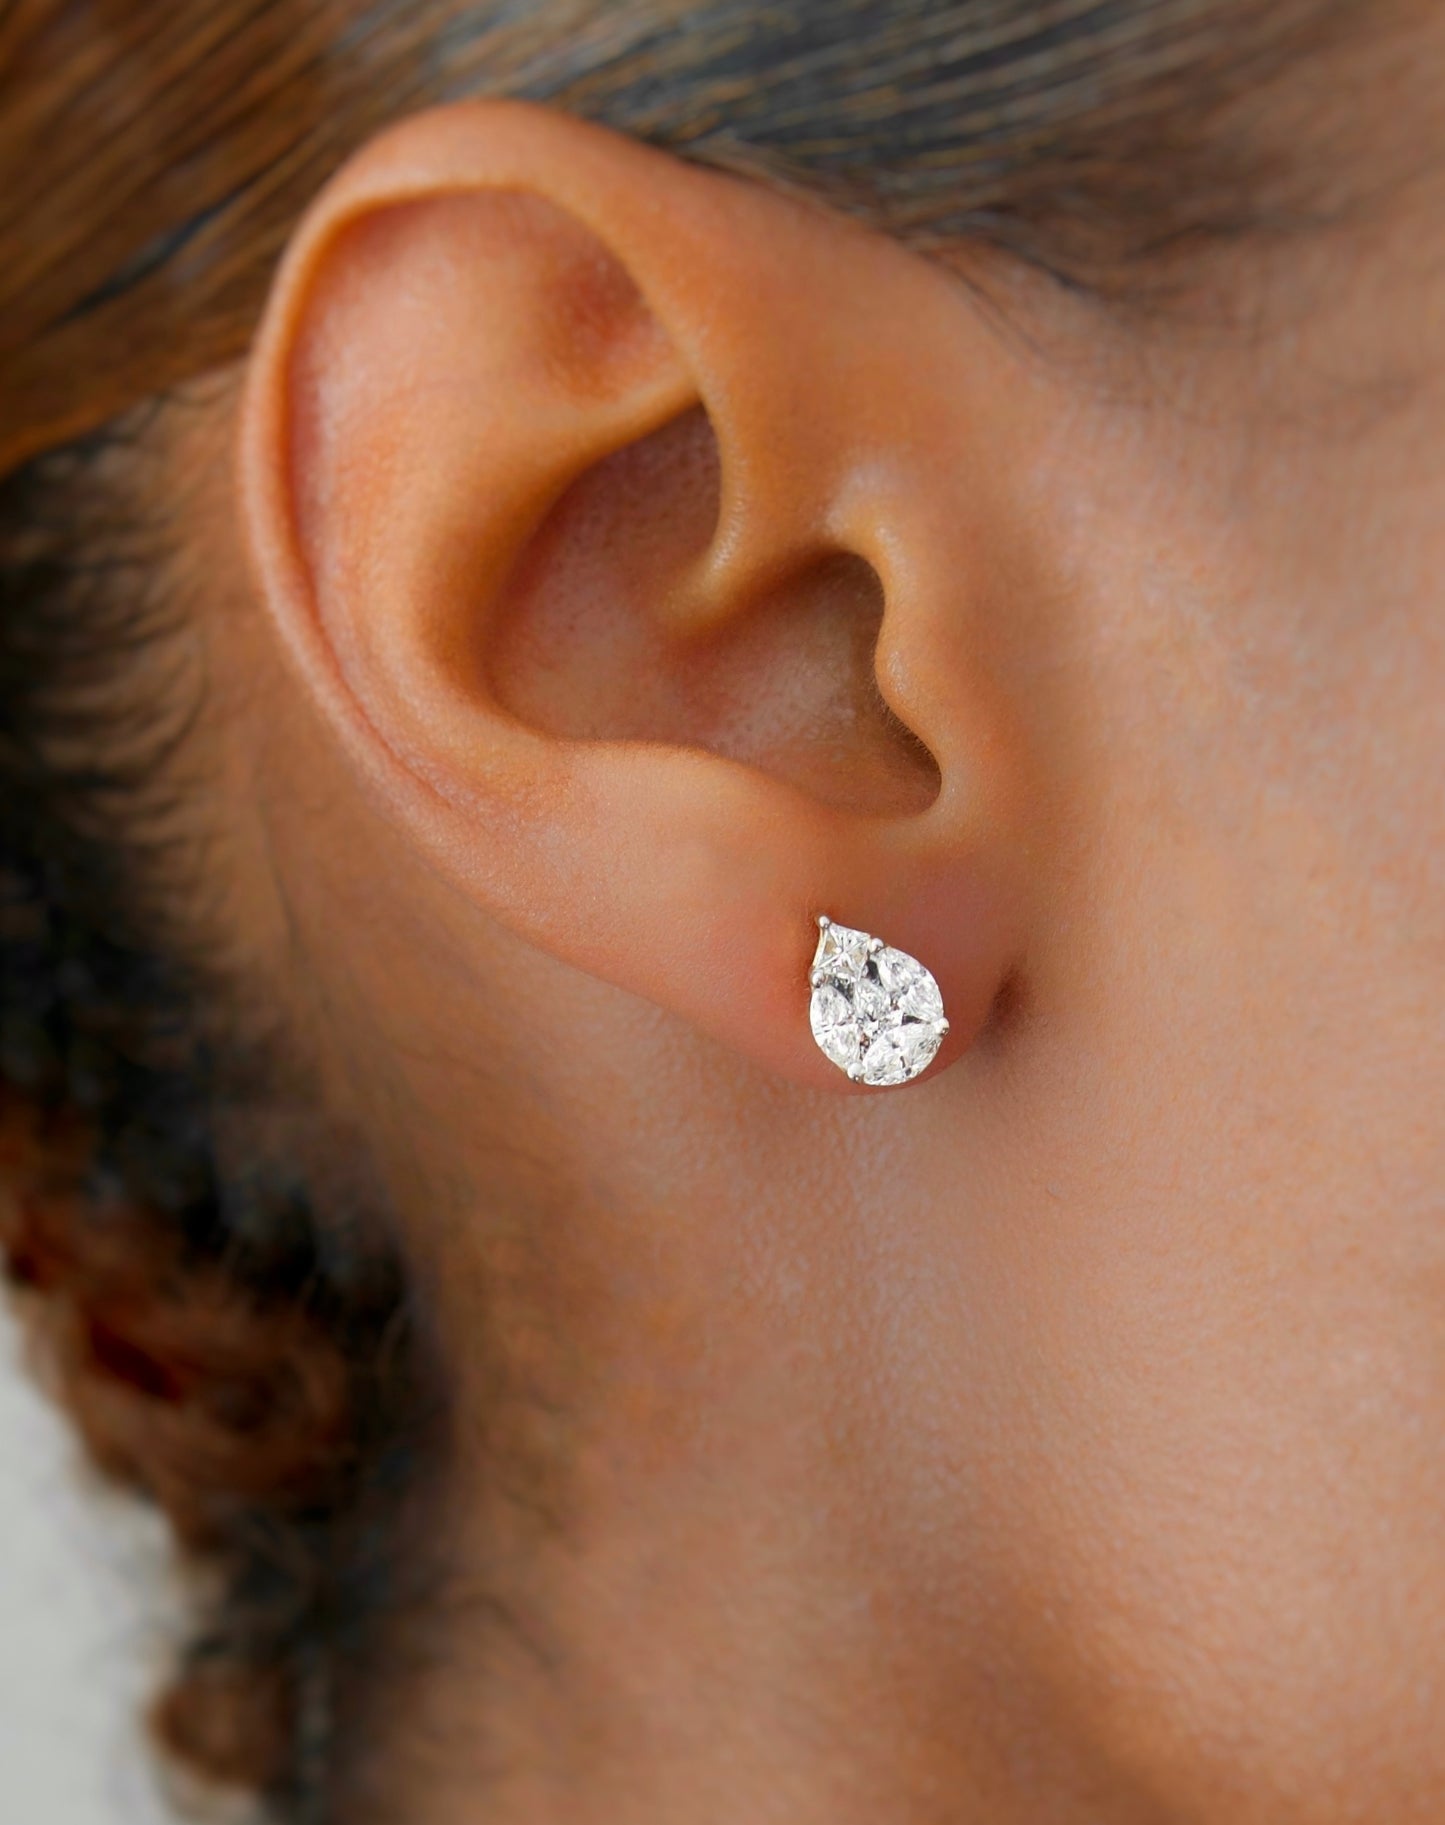 Le Cercle Illusion Pear Shaped Stud Earrings